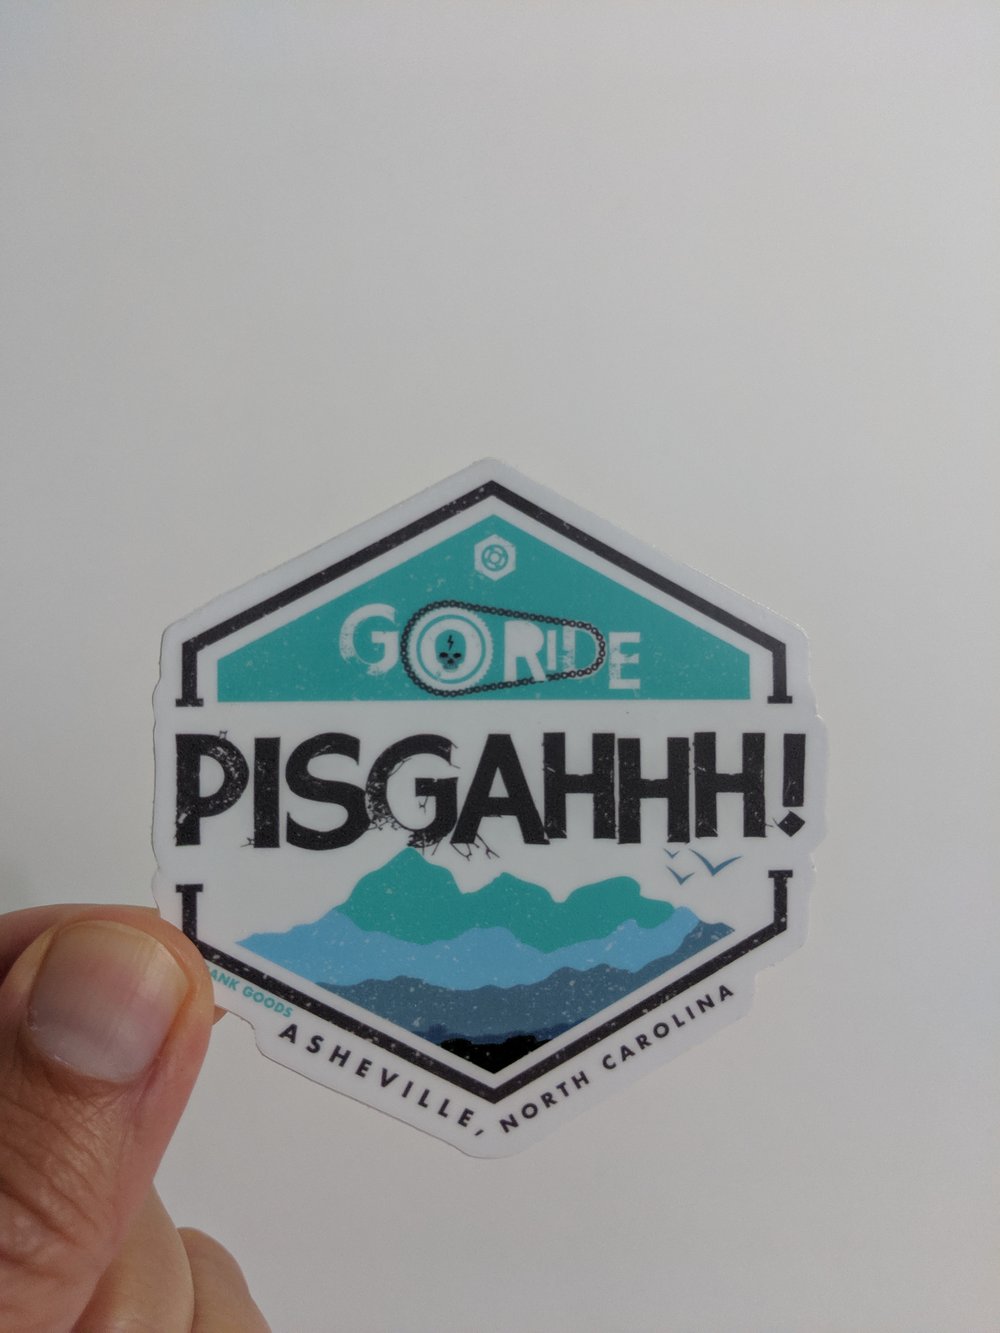 "Go Ride PISGAHHH!" Custom die-cut vinyl sticker